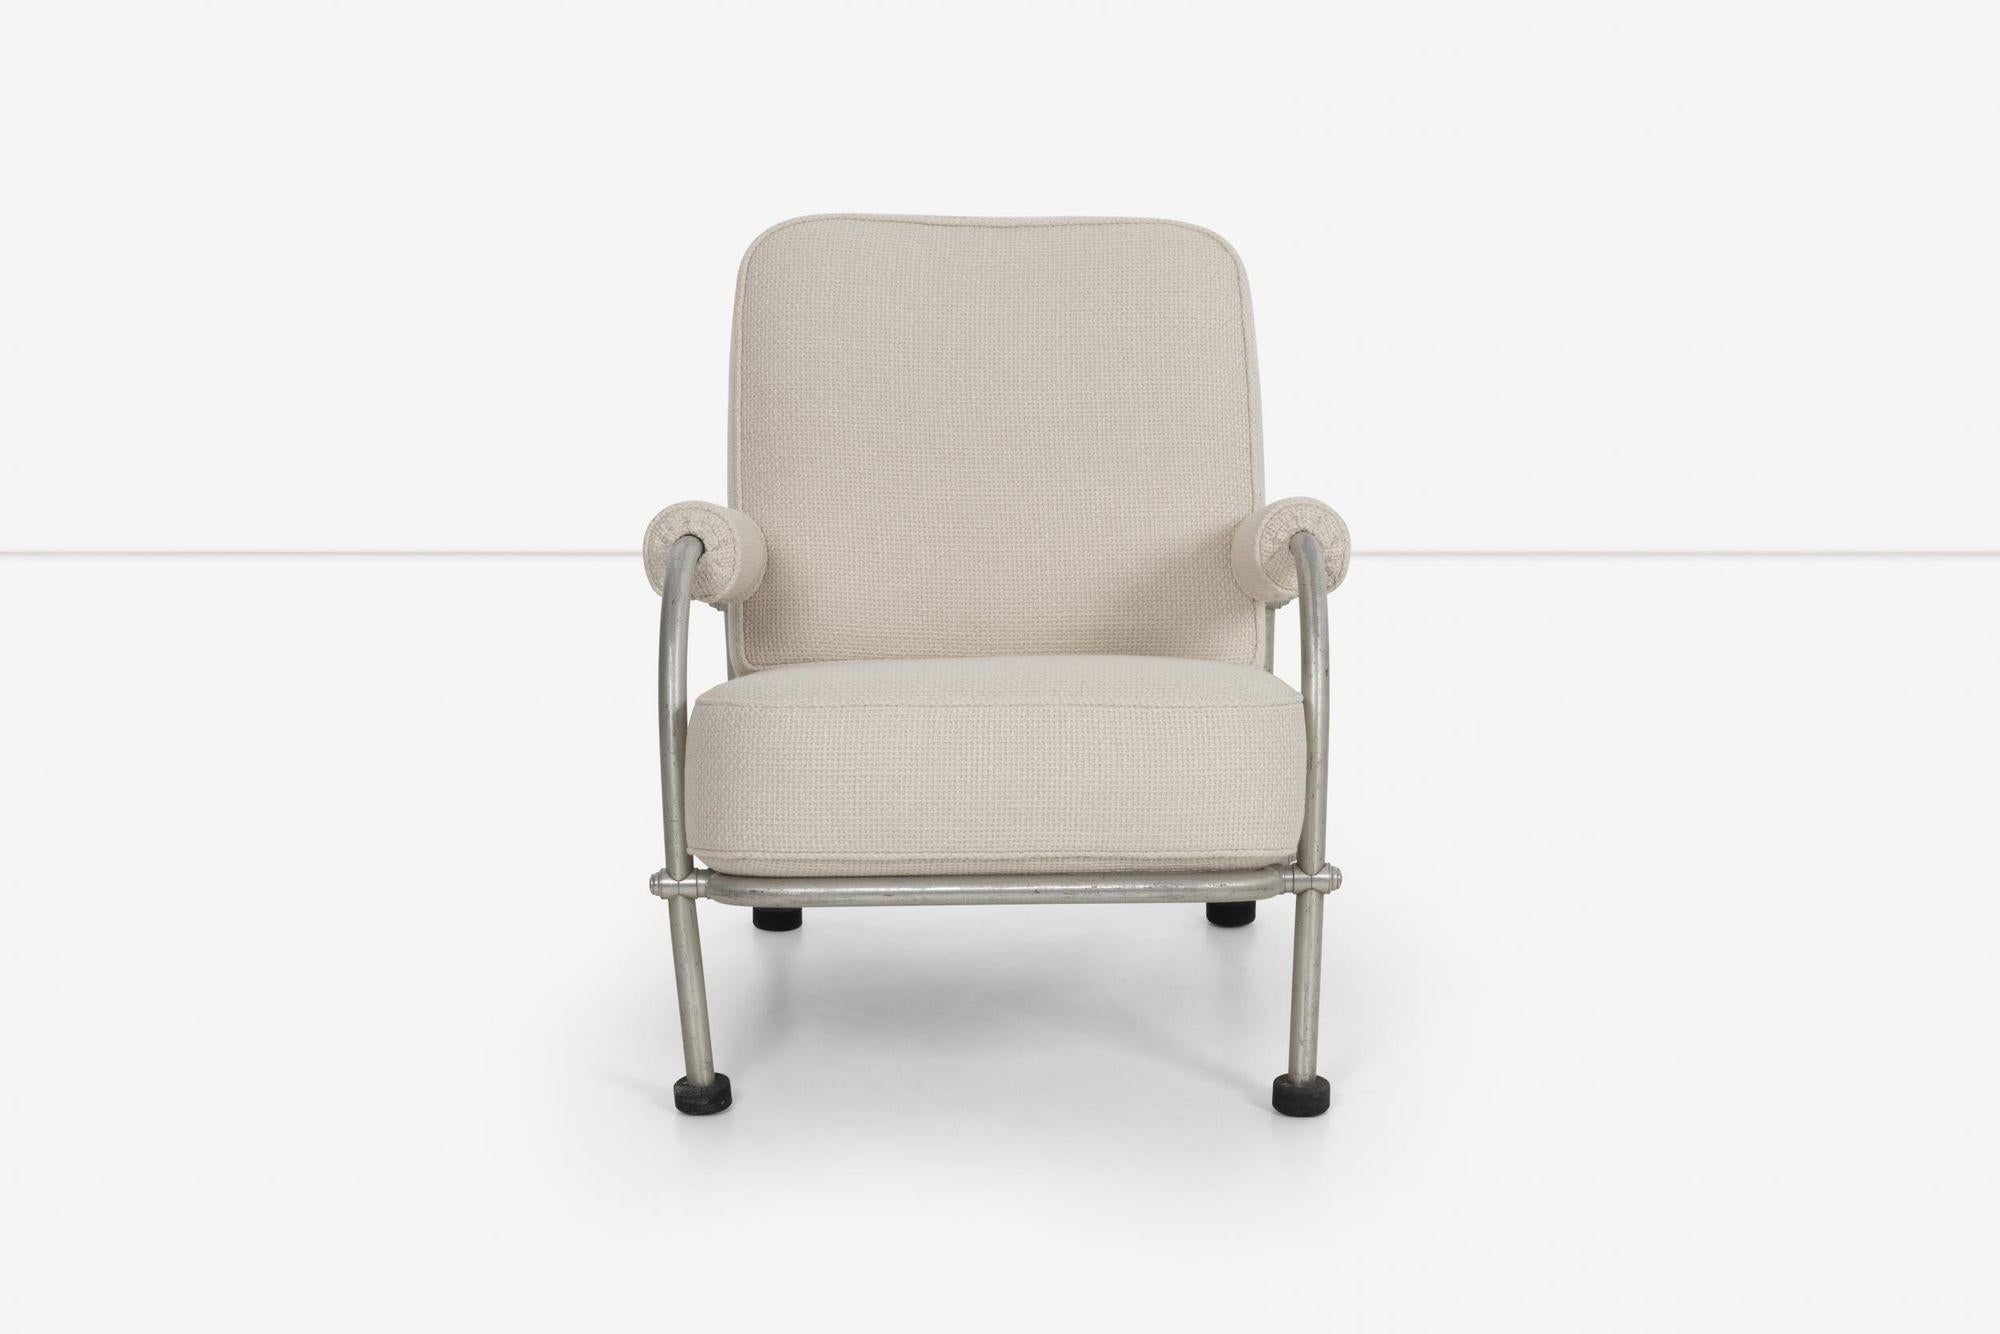 Warren McArthur Lounge-Stühle von Warren McArthur Corporation
Gestell aus Aluminium, Polsterung Great Plains aus gewebter Wolle, Gummifüße
Abmessungen:
31 